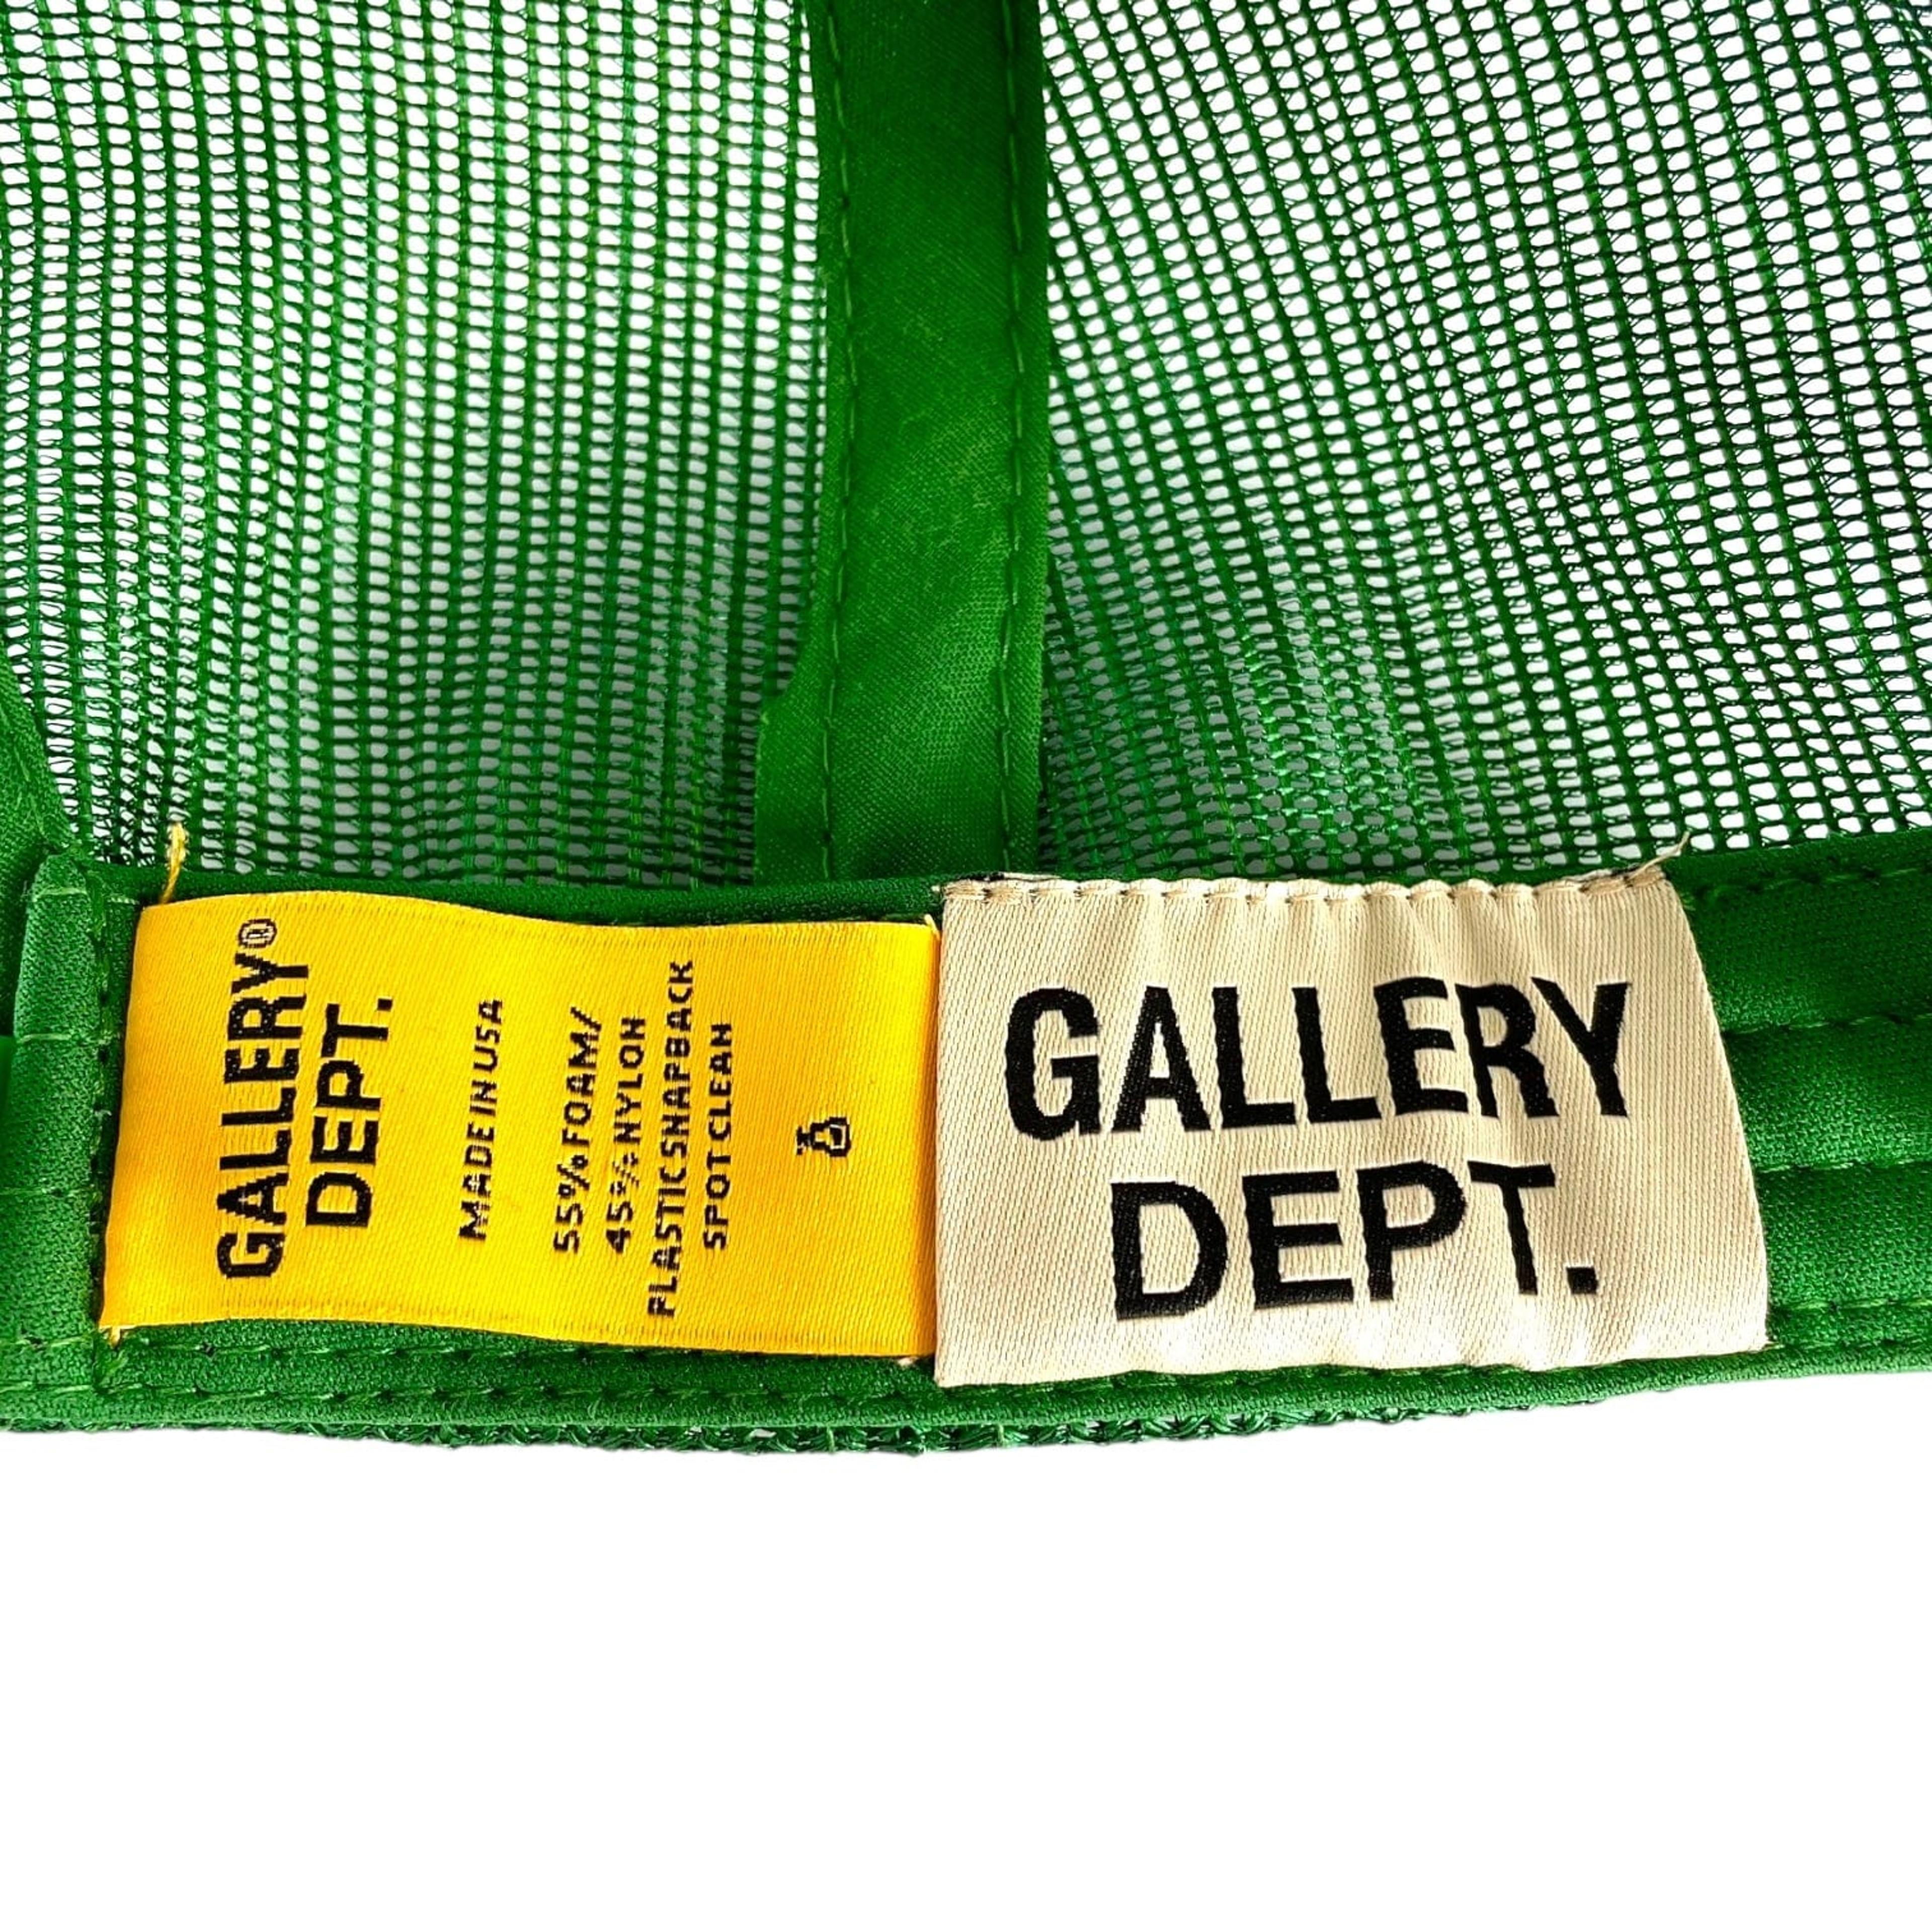 Alternate View 6 of Gallery Department DEPT. Logo Trucker Hat Green Yellow